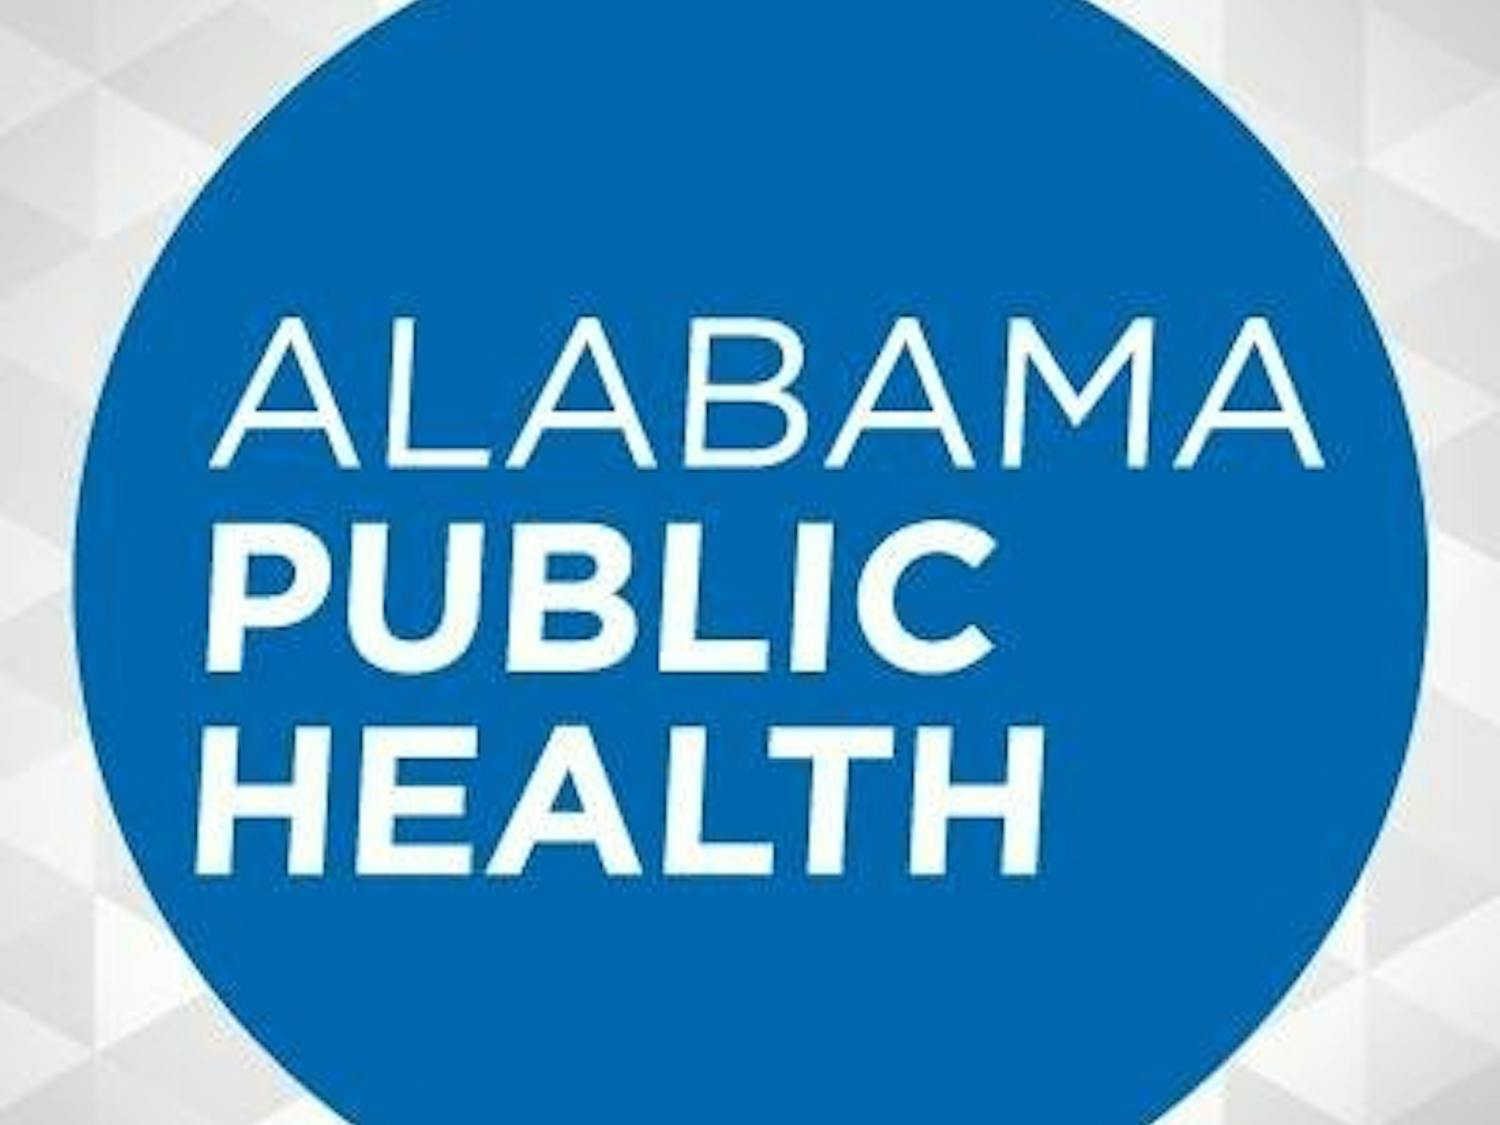 Alabama Public Health